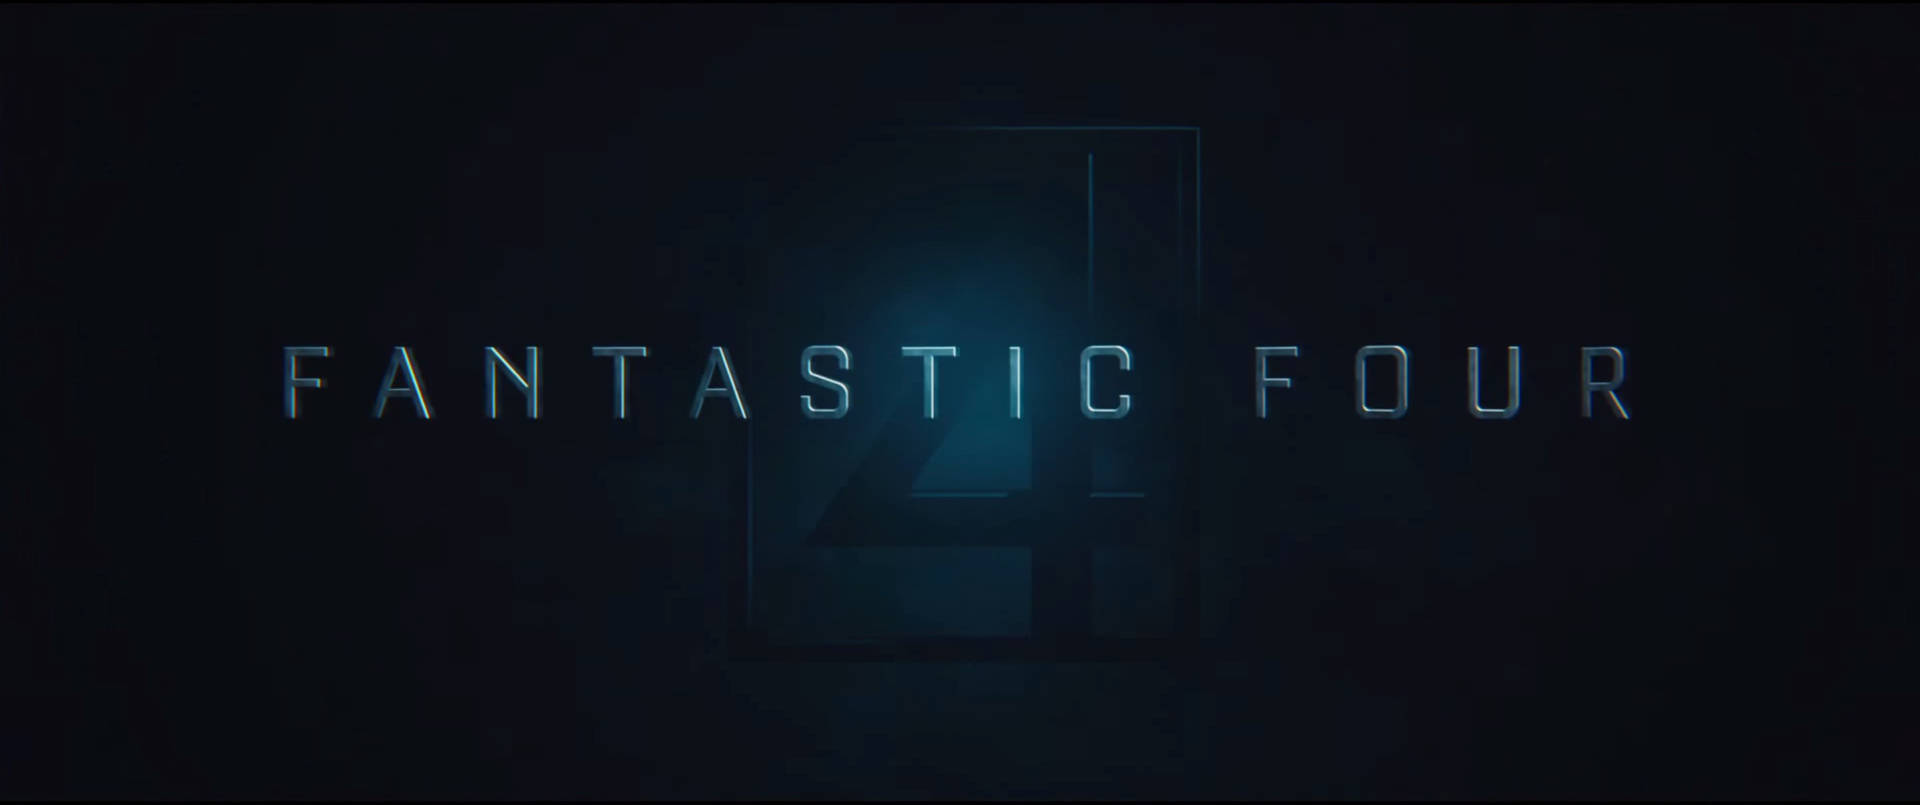 Fantastic Four 2015 Movie Logo Background